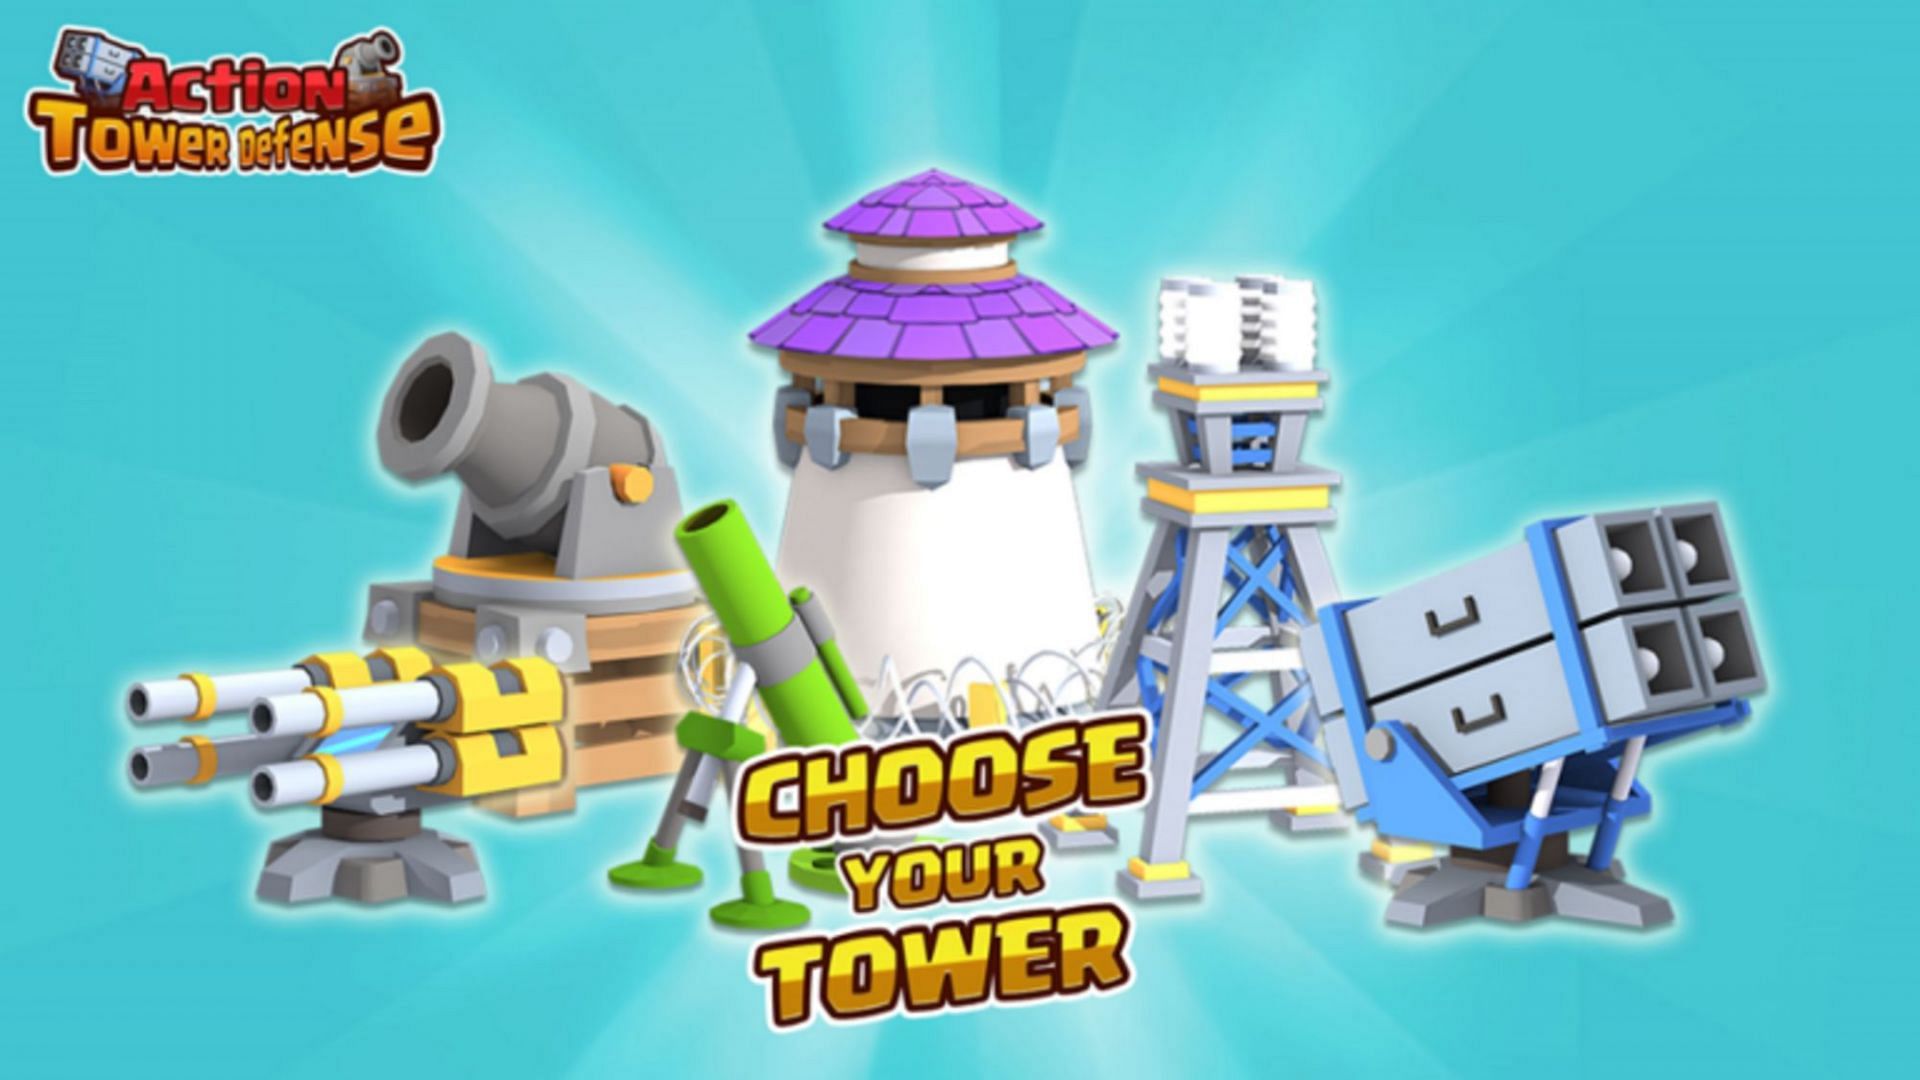 World Tower Defense v1.5.1 Codes & Trello - Free Gifts